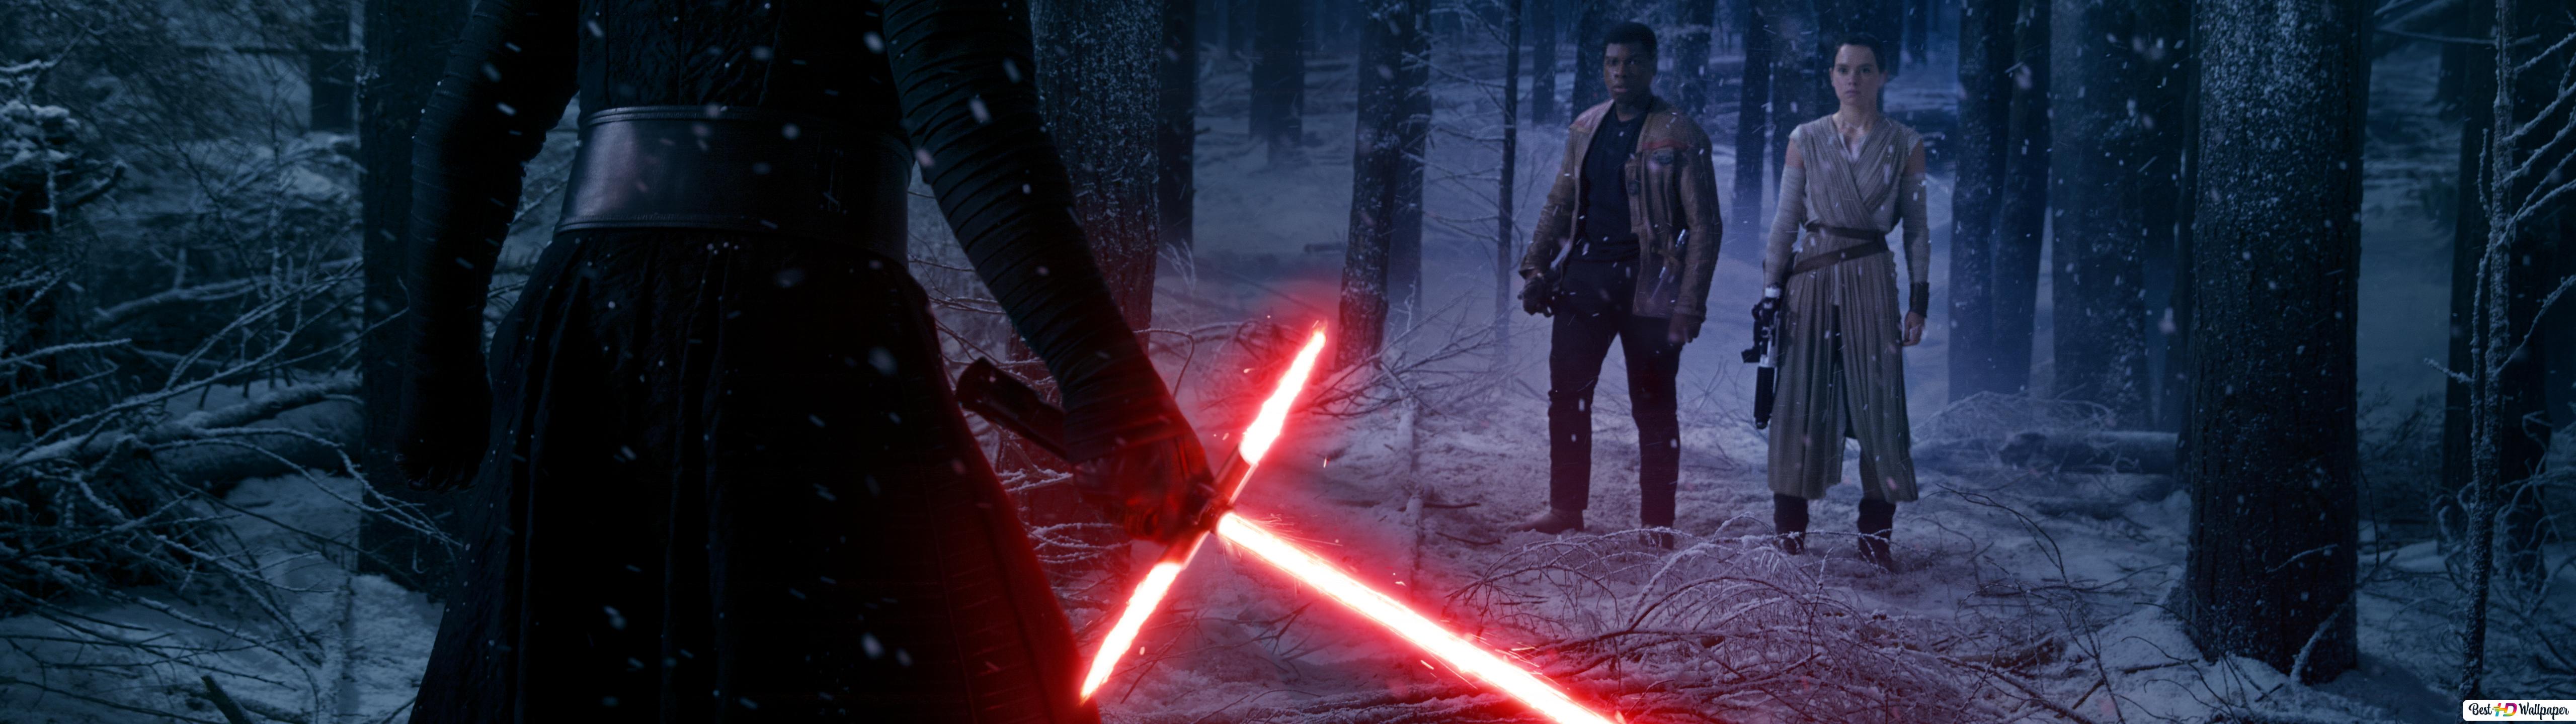 Star Wars Episode VII: The Force Awakens HD wallpaper download